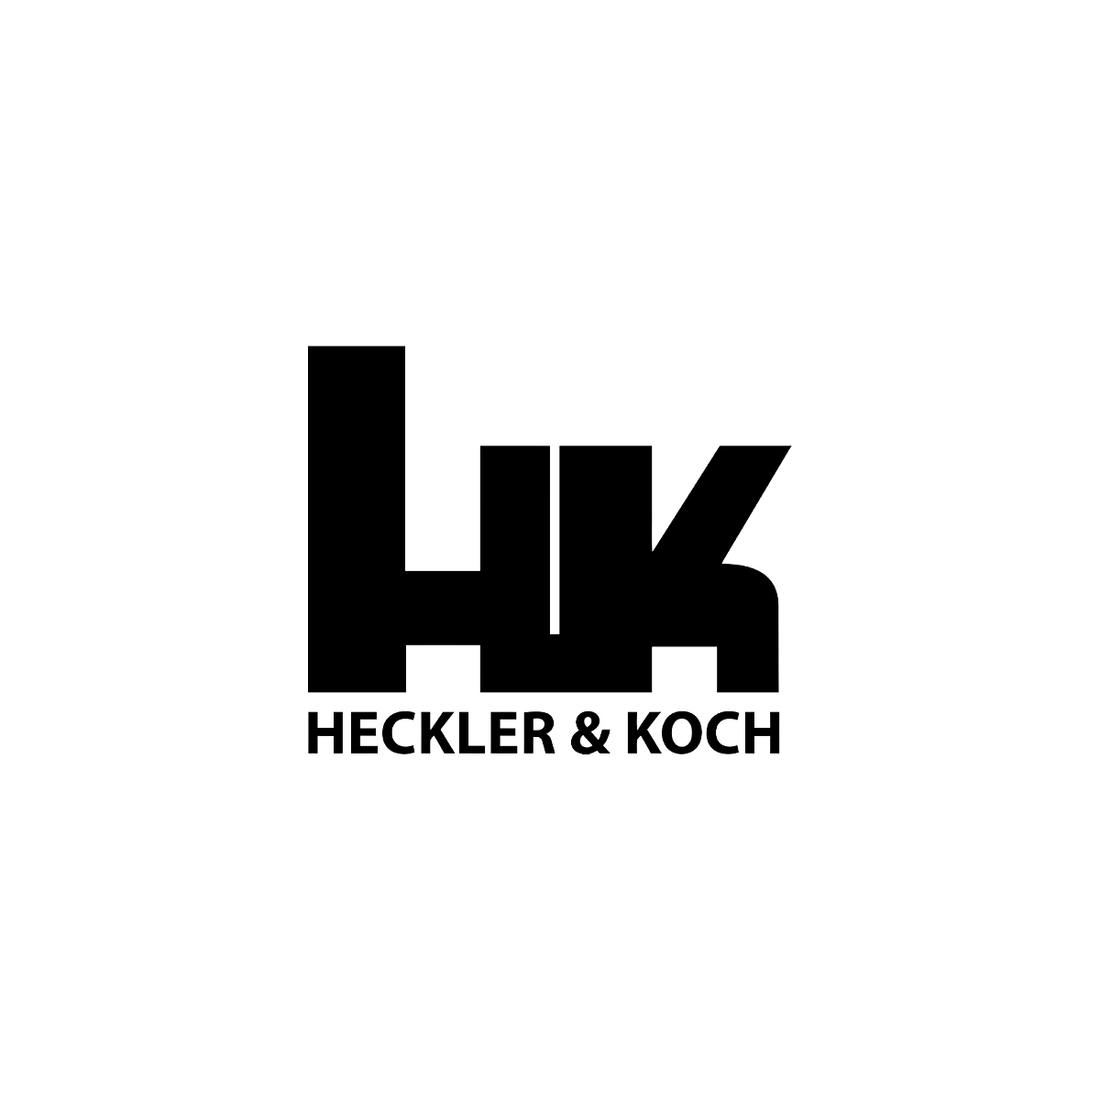 Heckler & Koch Freedom Drop Leg Holsters